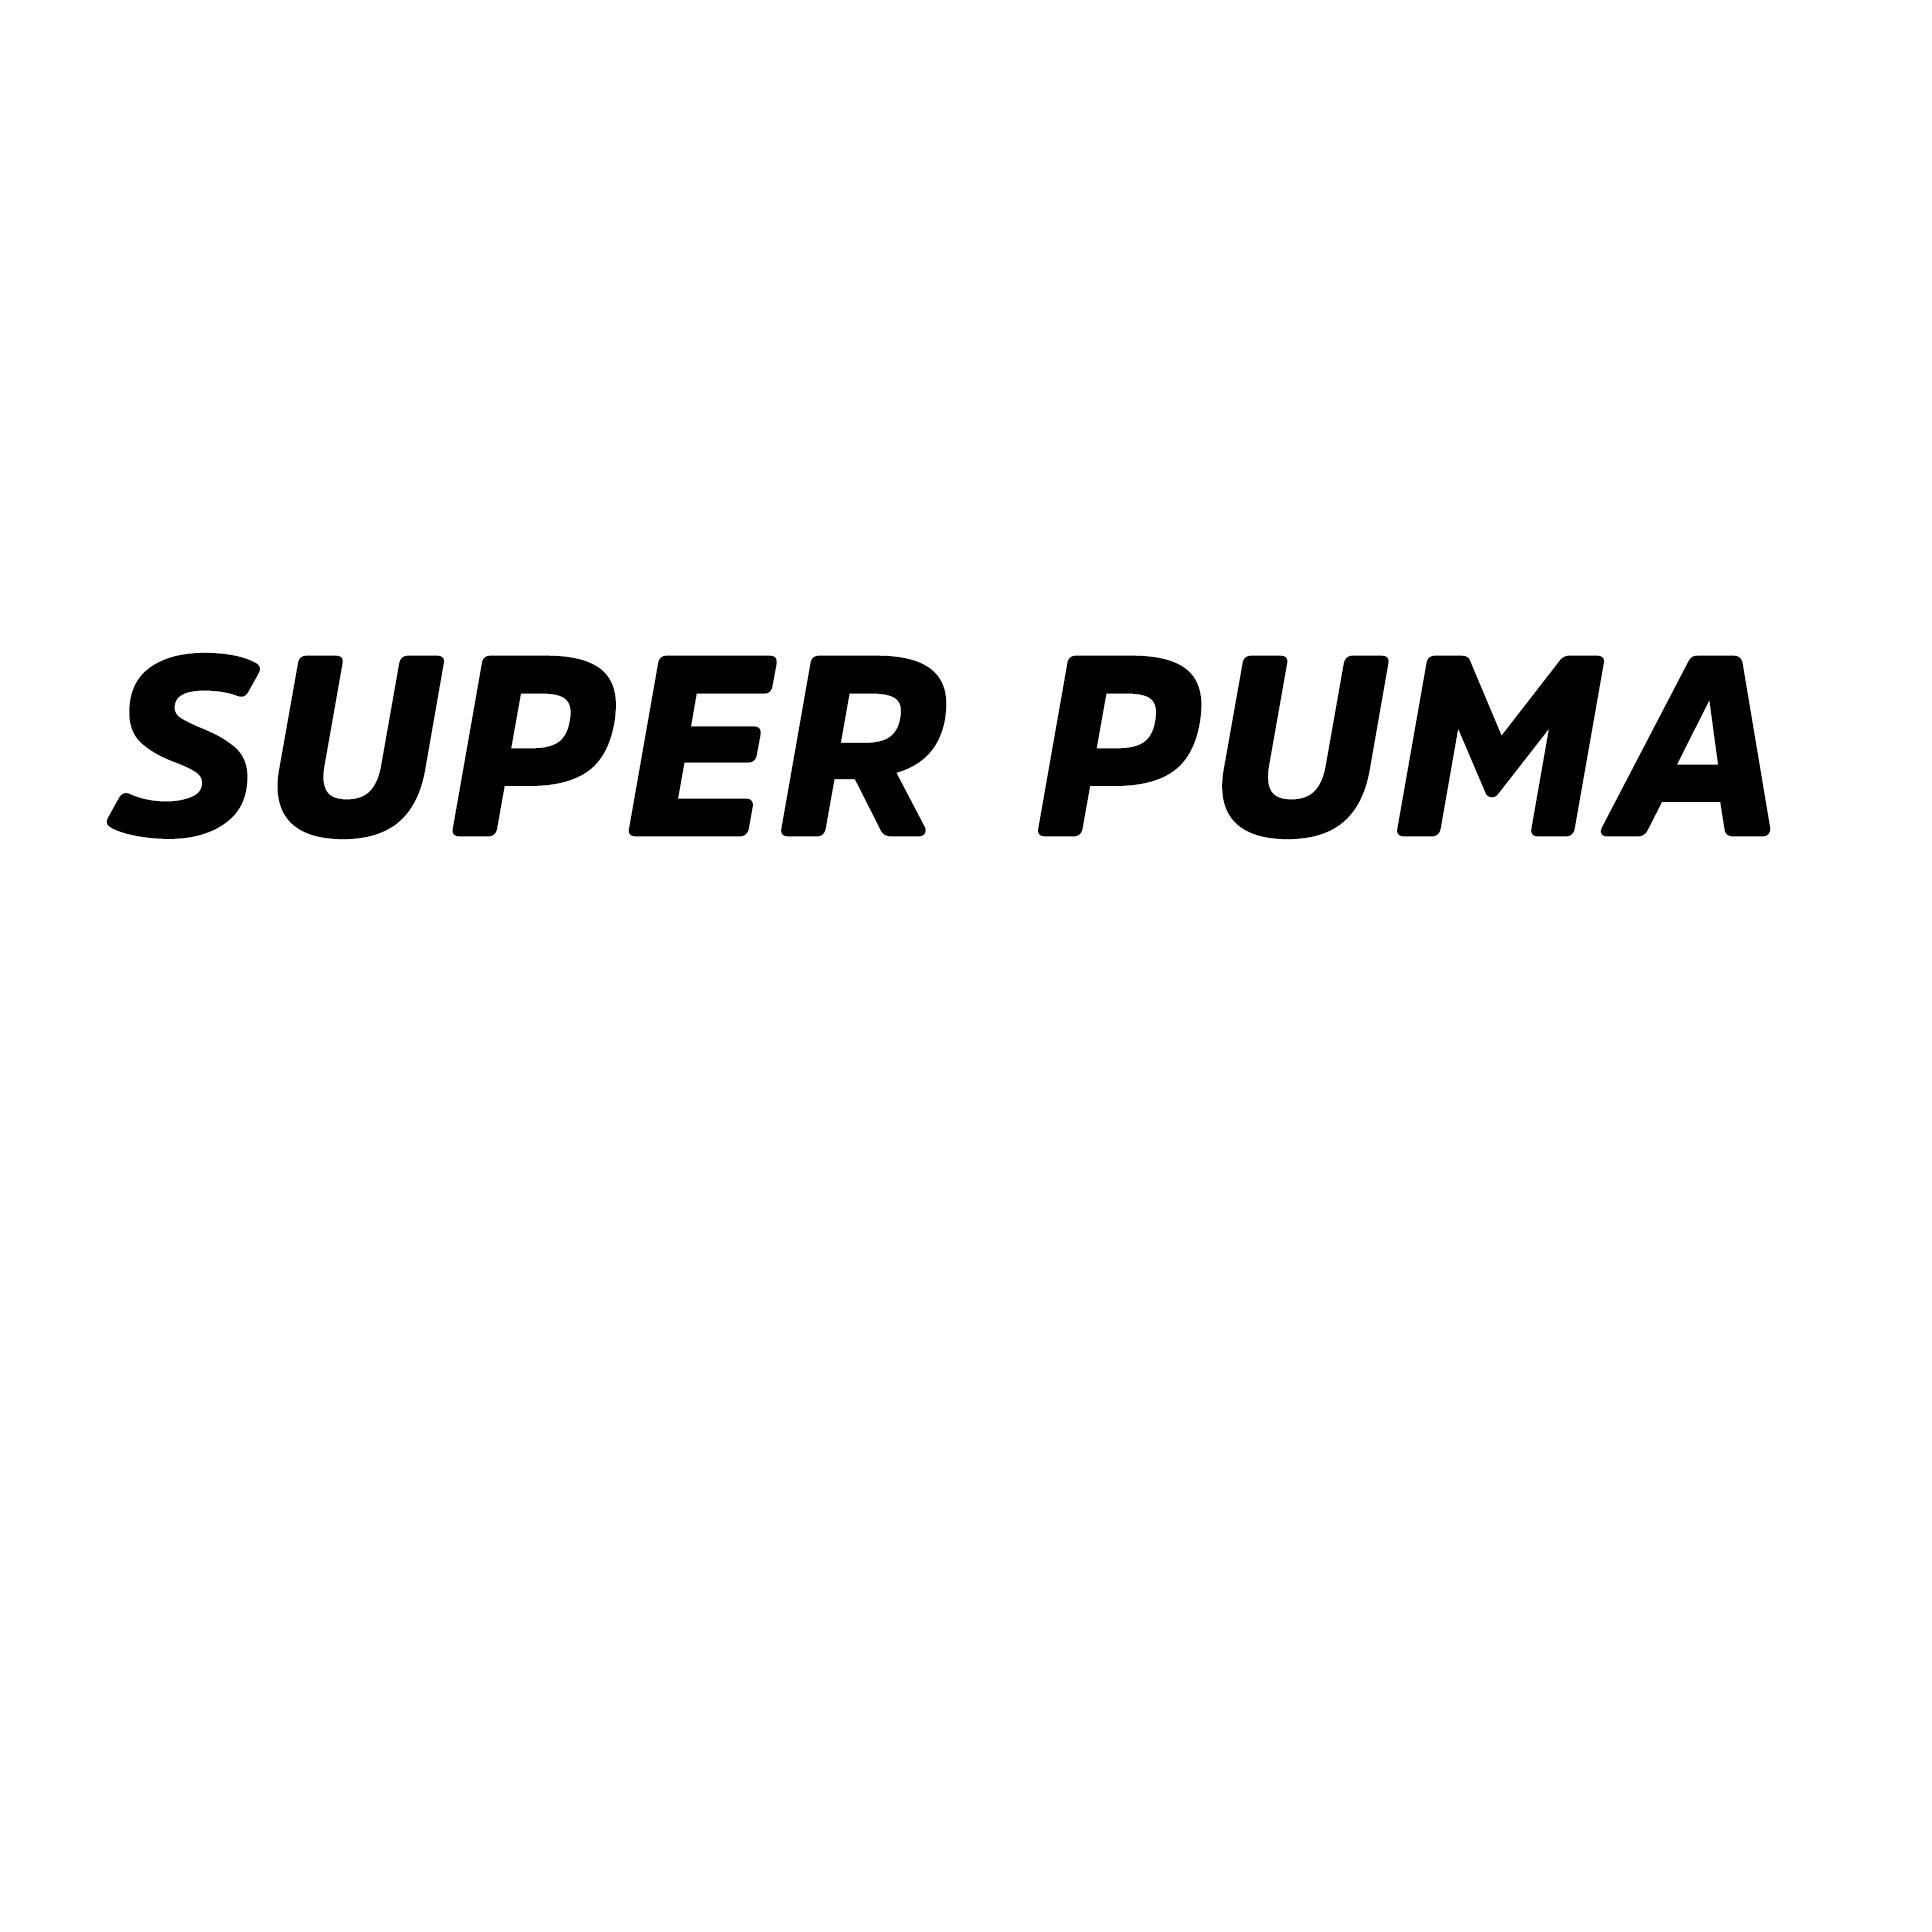 SUPER PUMA商标转让